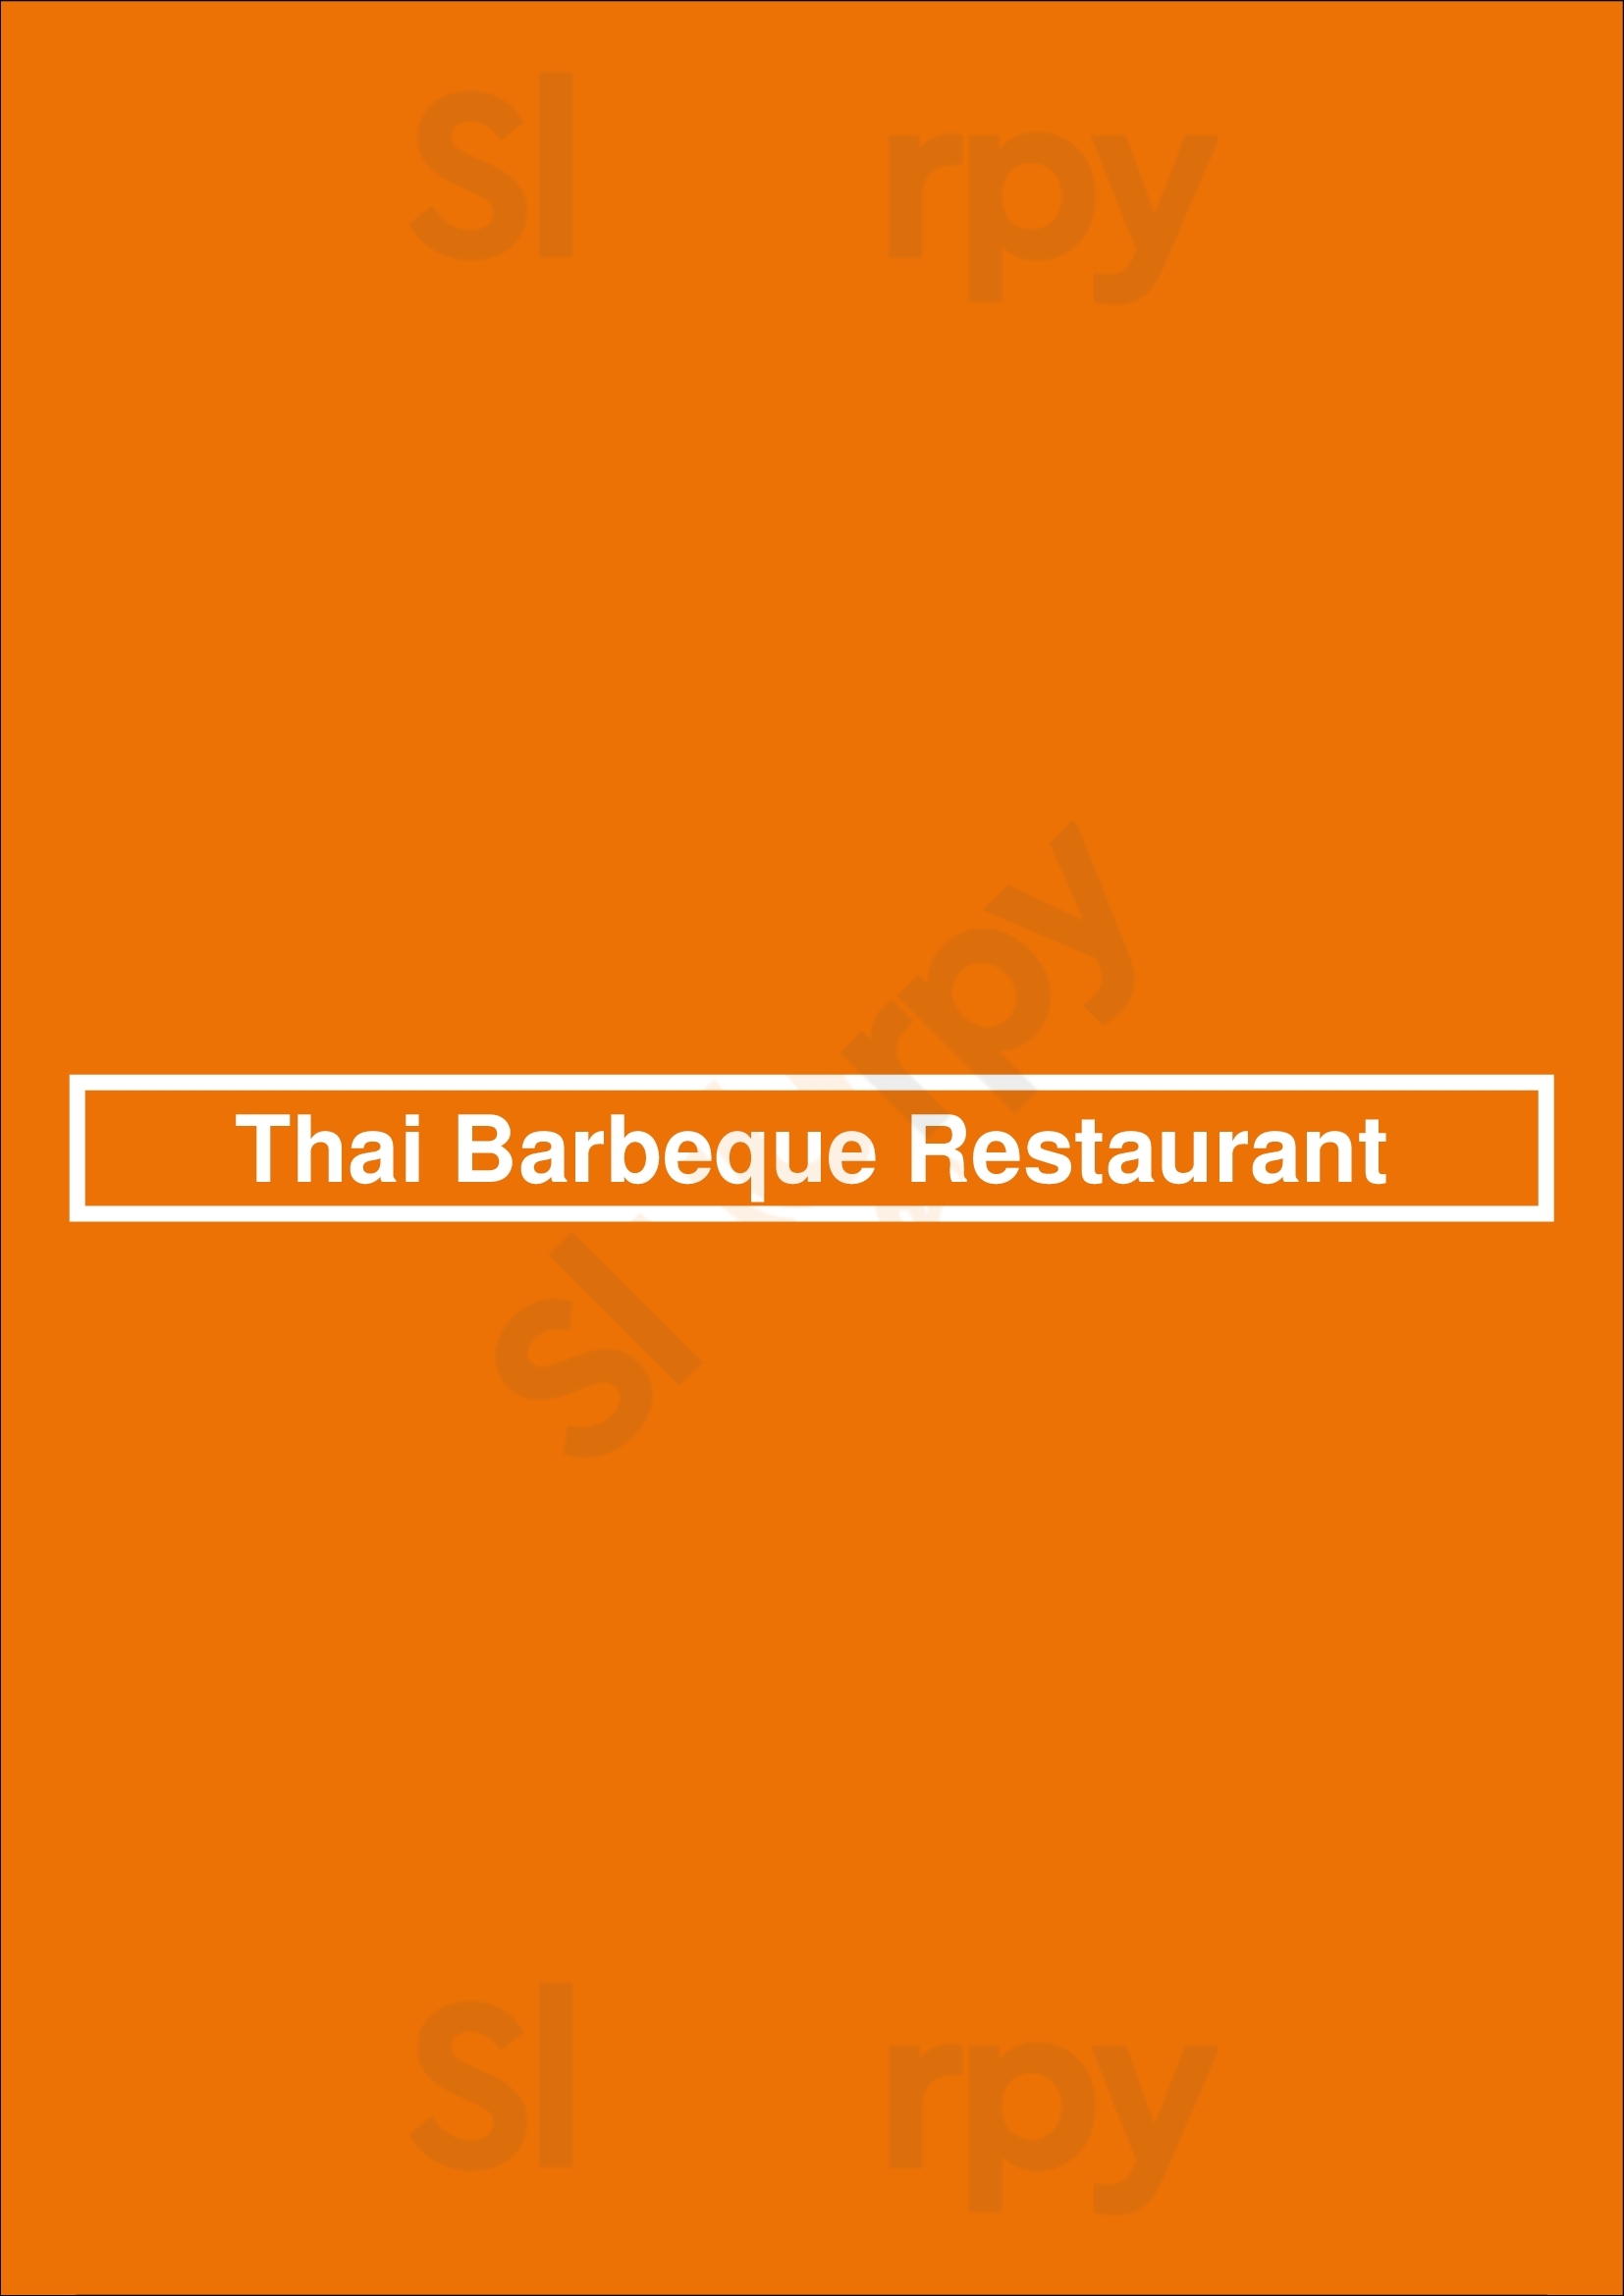 Thai Barbeque Restaurant Milwaukee Menu - 1